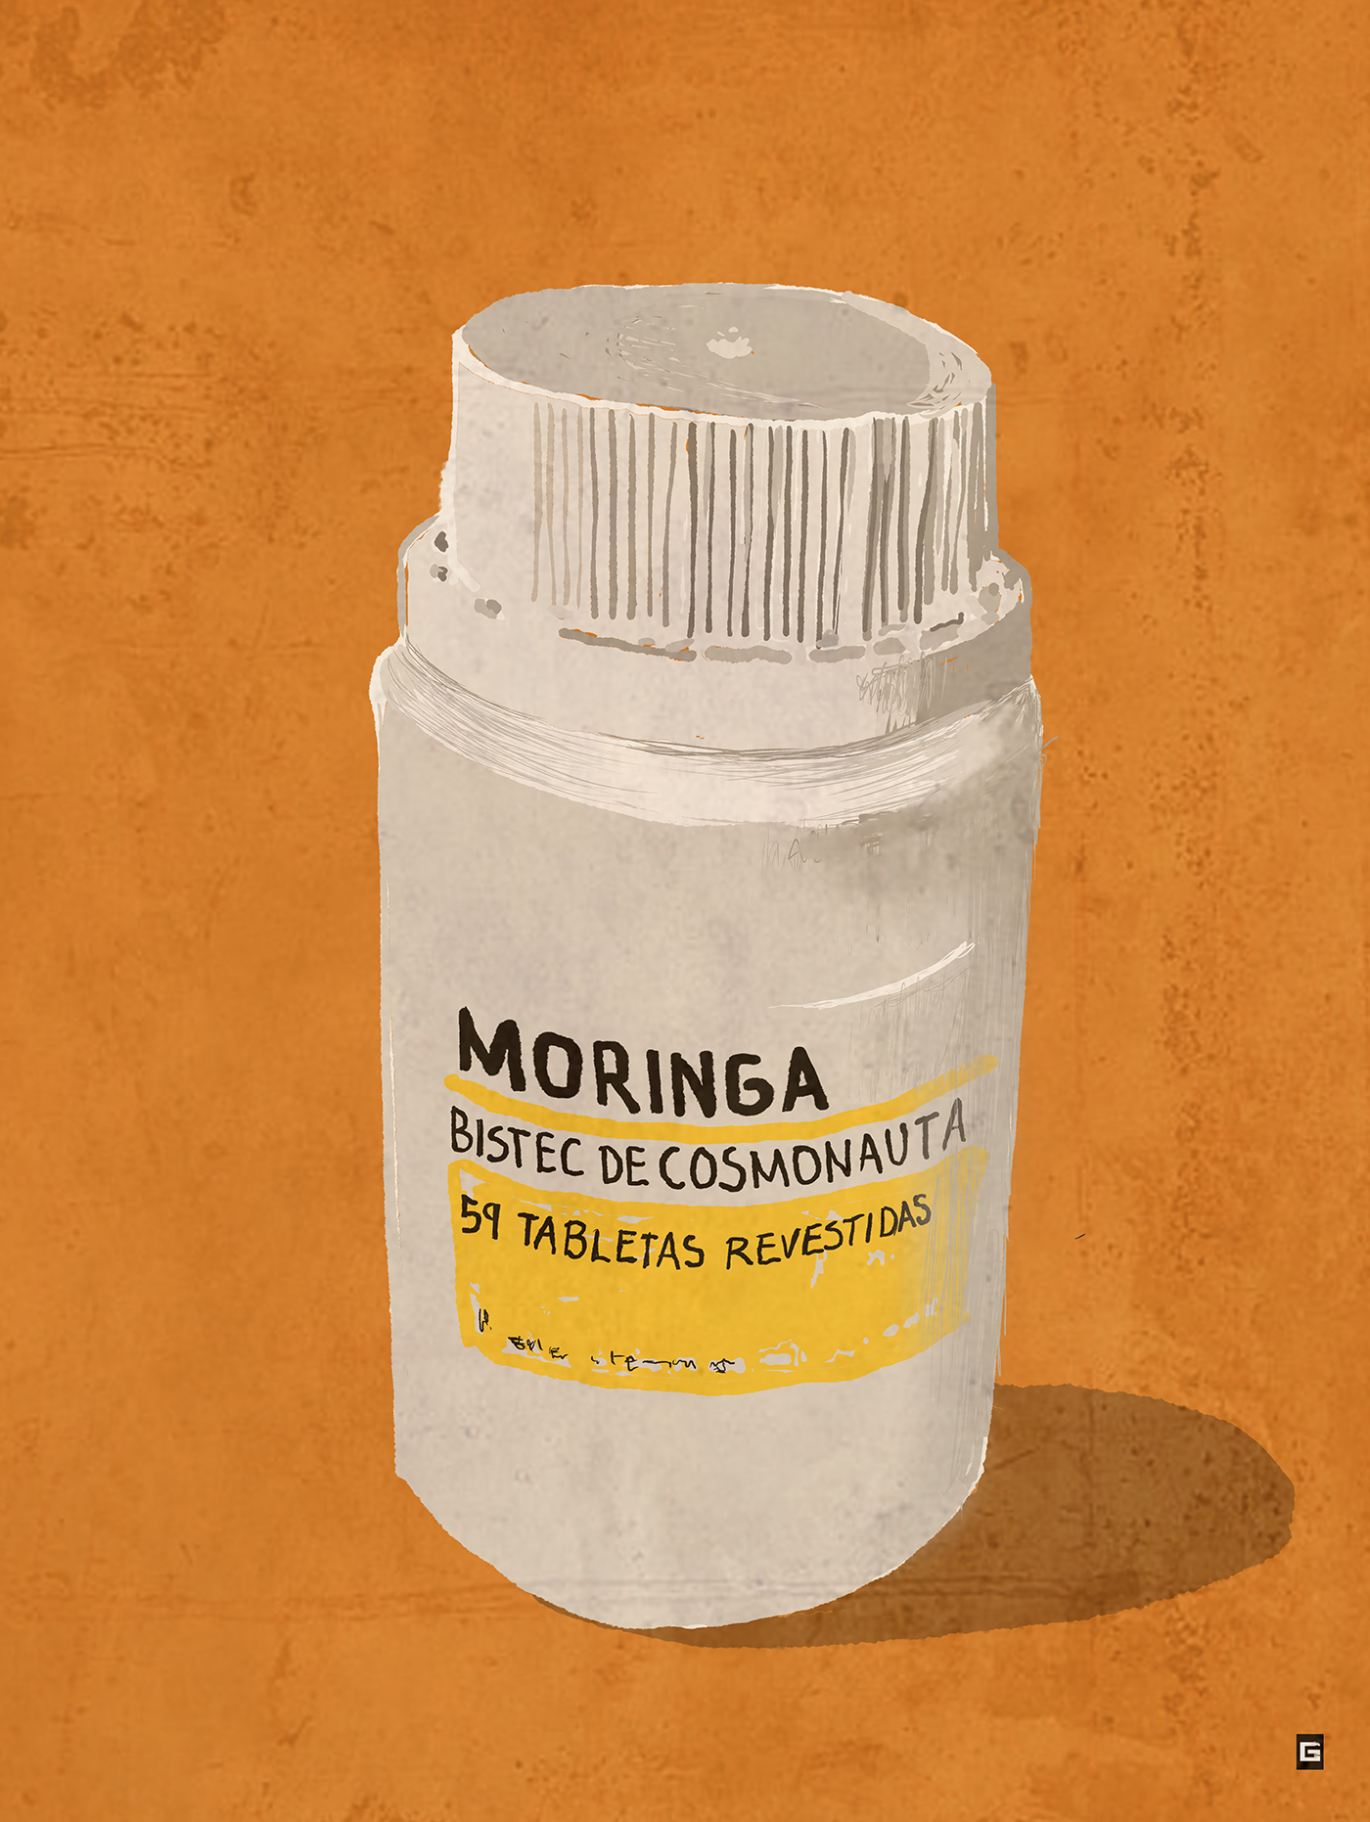 Gorki Aguila, Moringa, 2020, digital print limited edition, 1:10